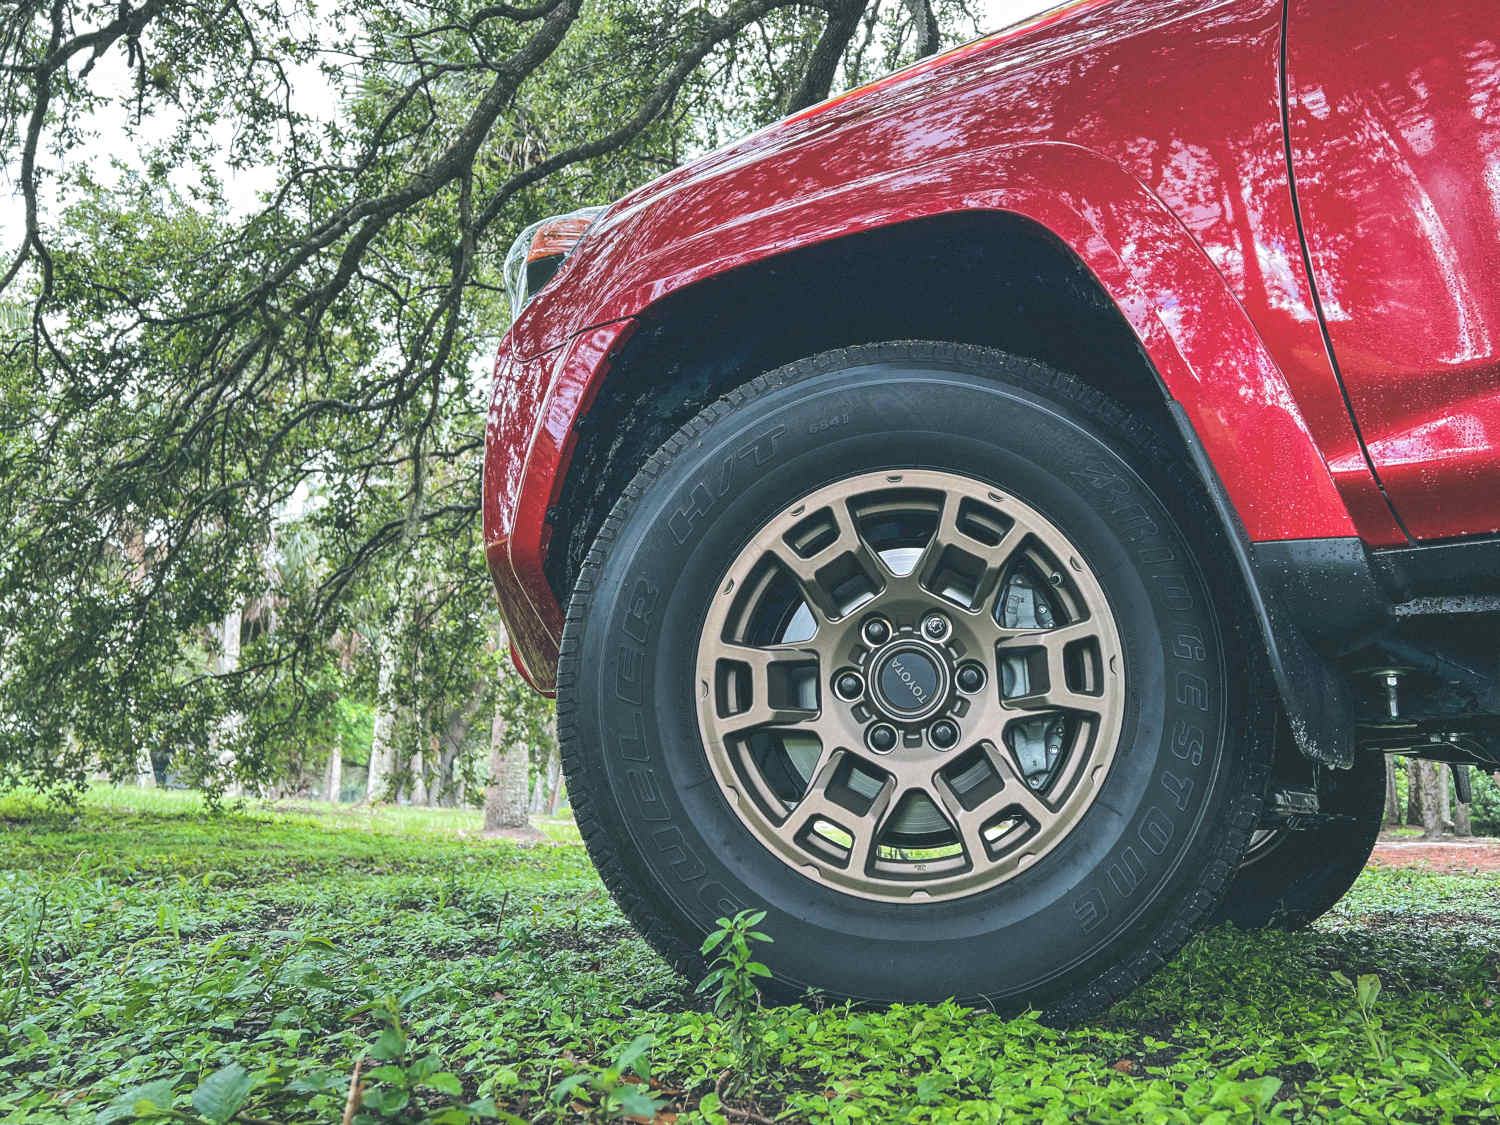 Bronze wheels on the Toyota SUV